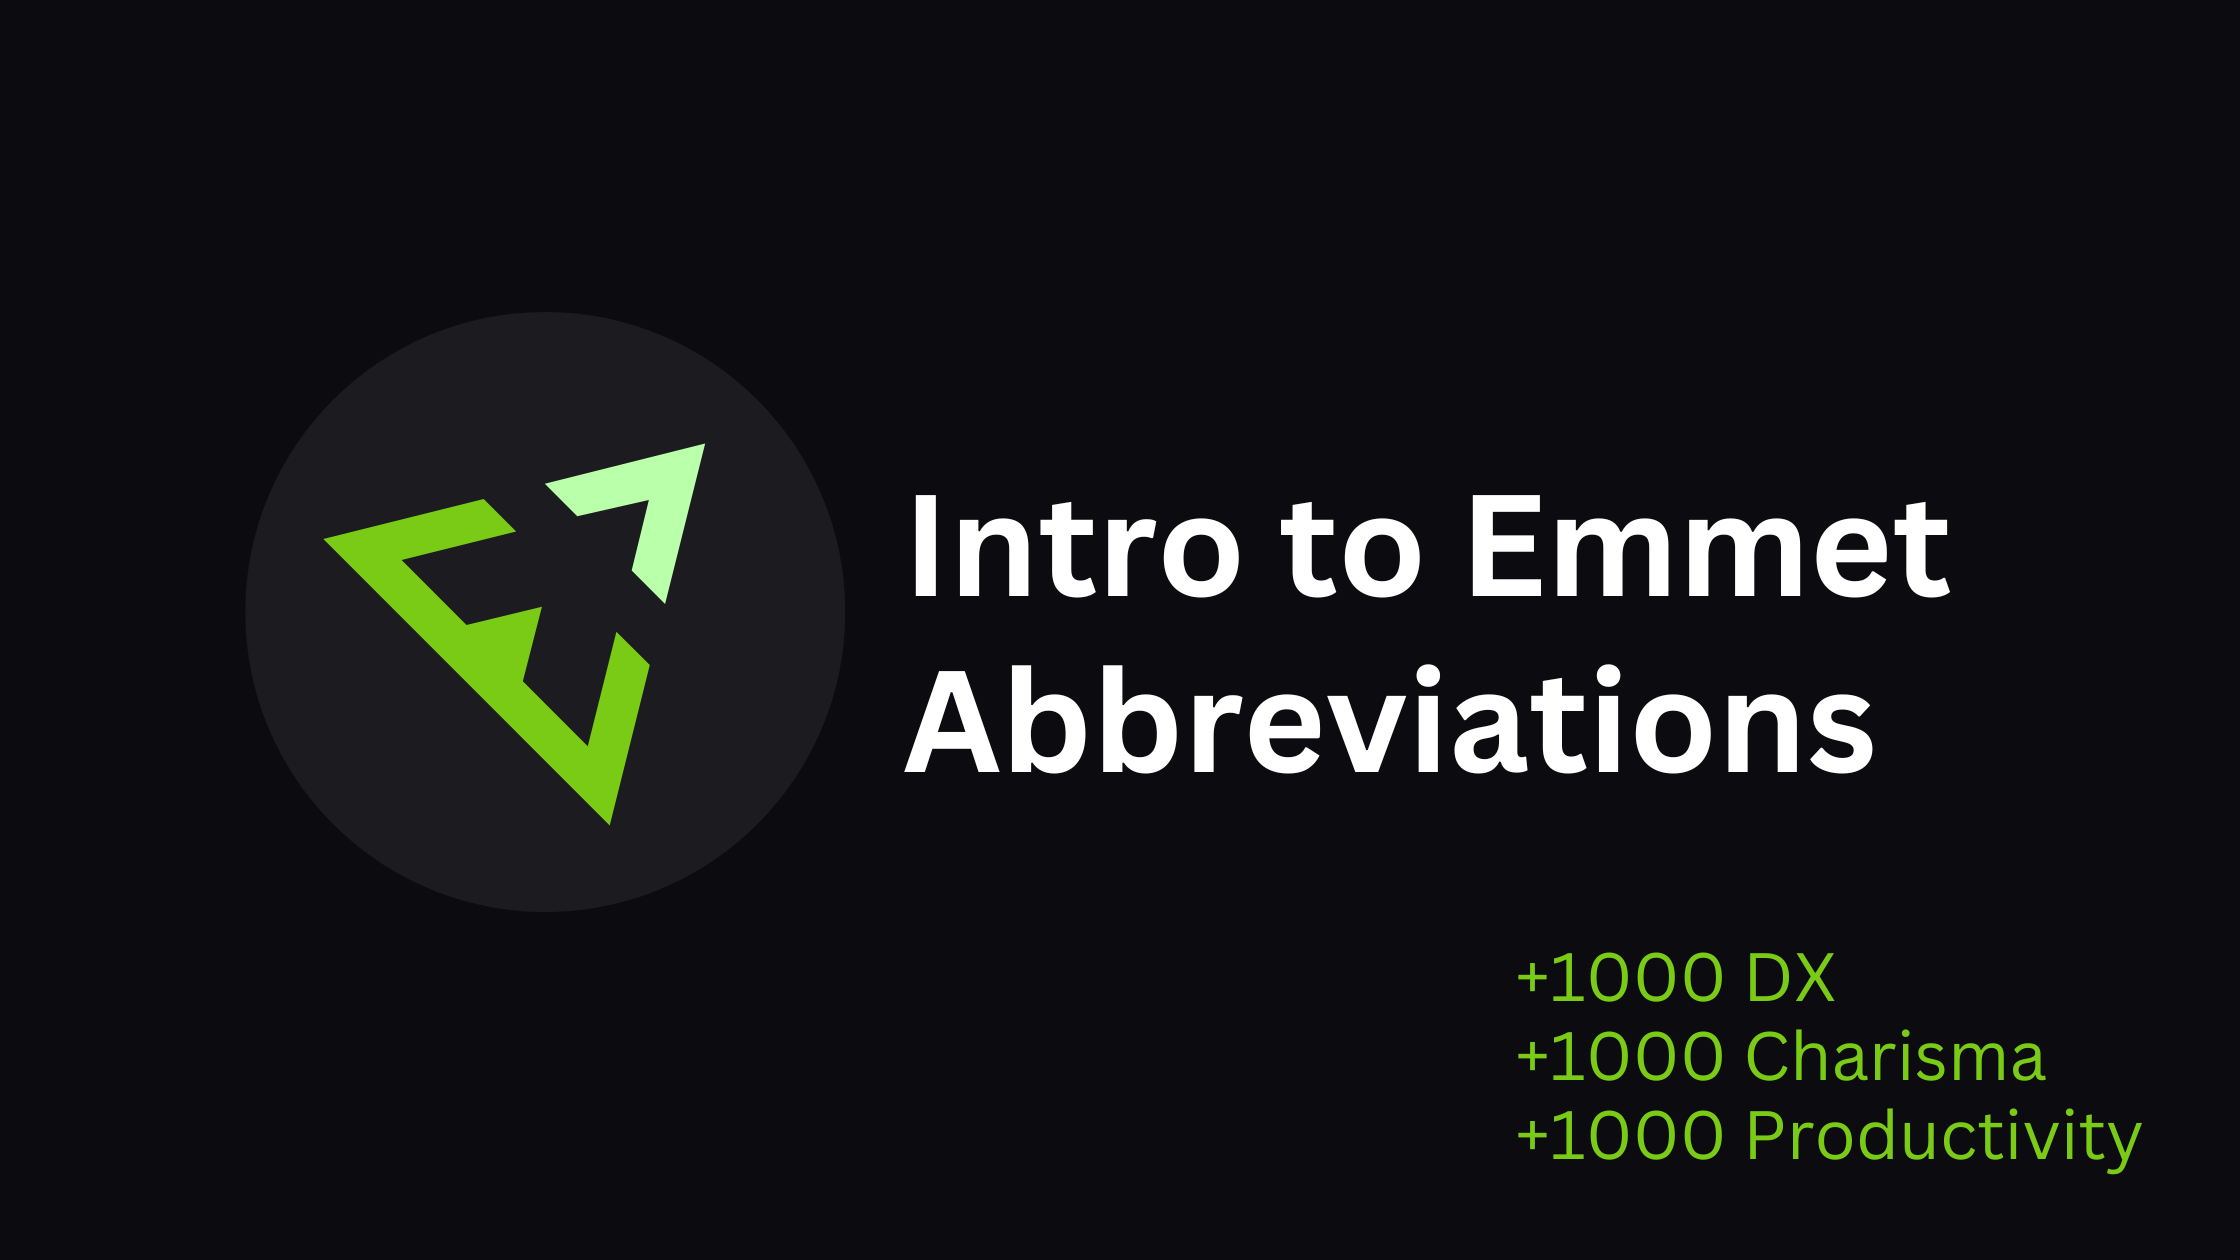 Intro to Emmet Abbreviations